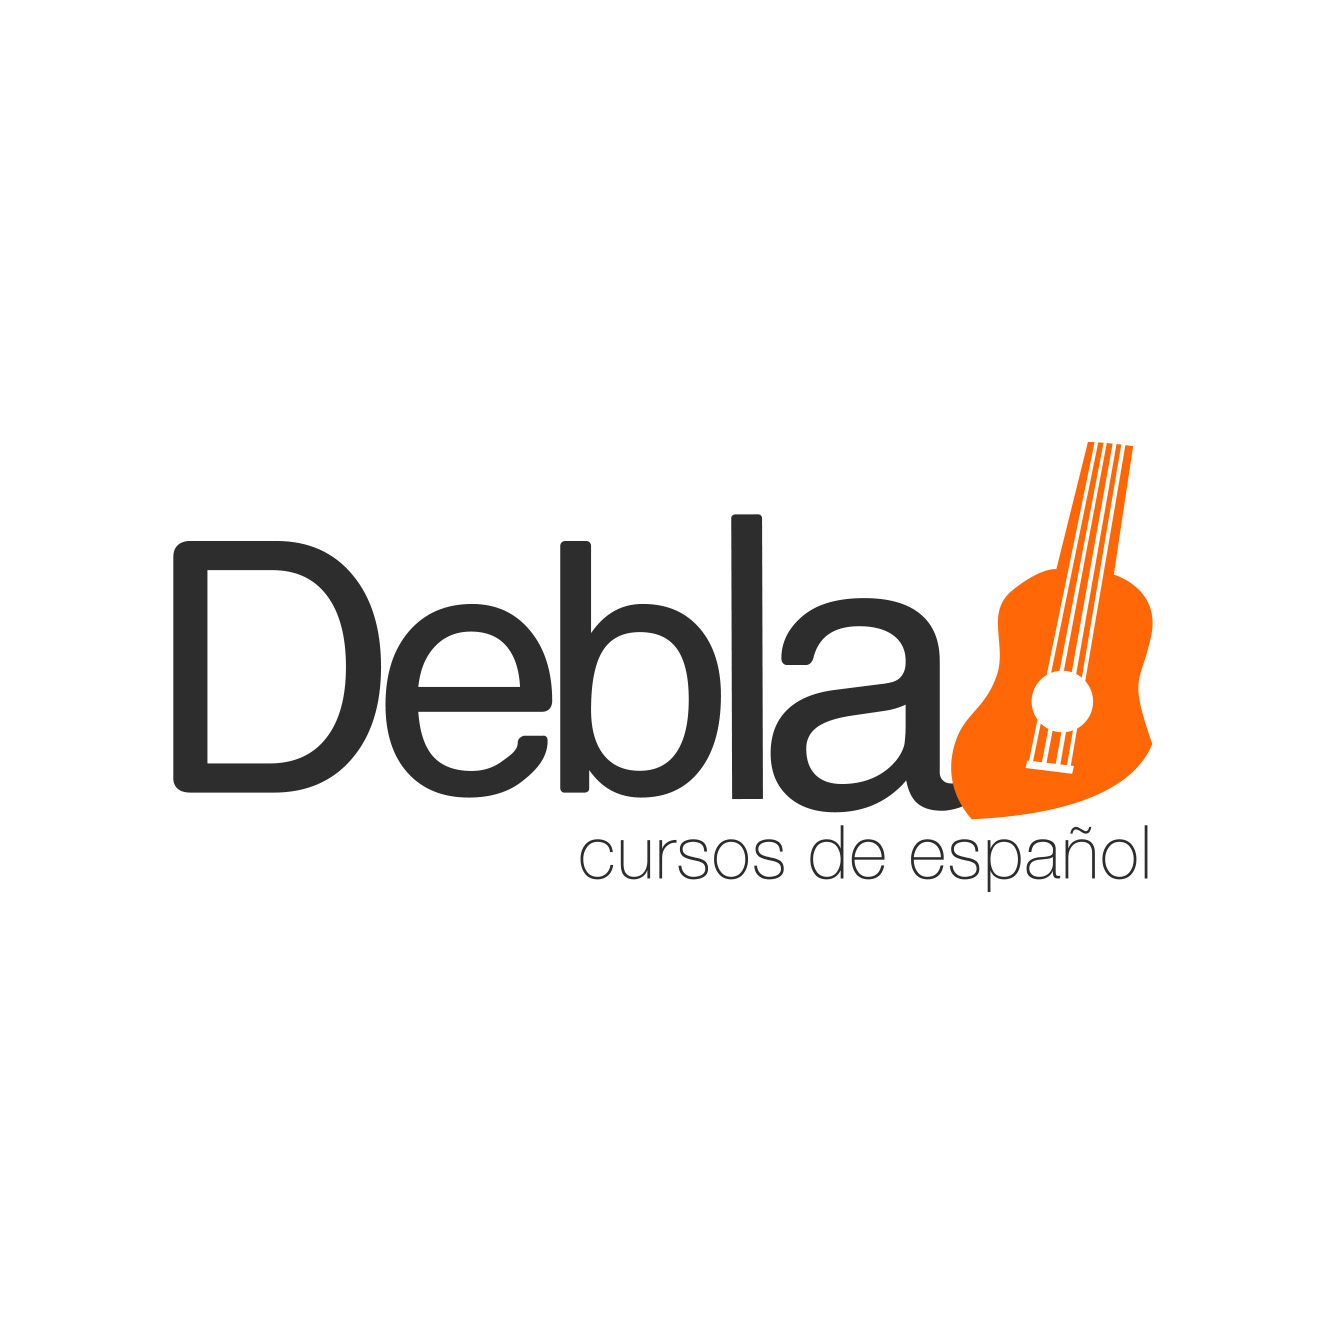 (c) Debla.com